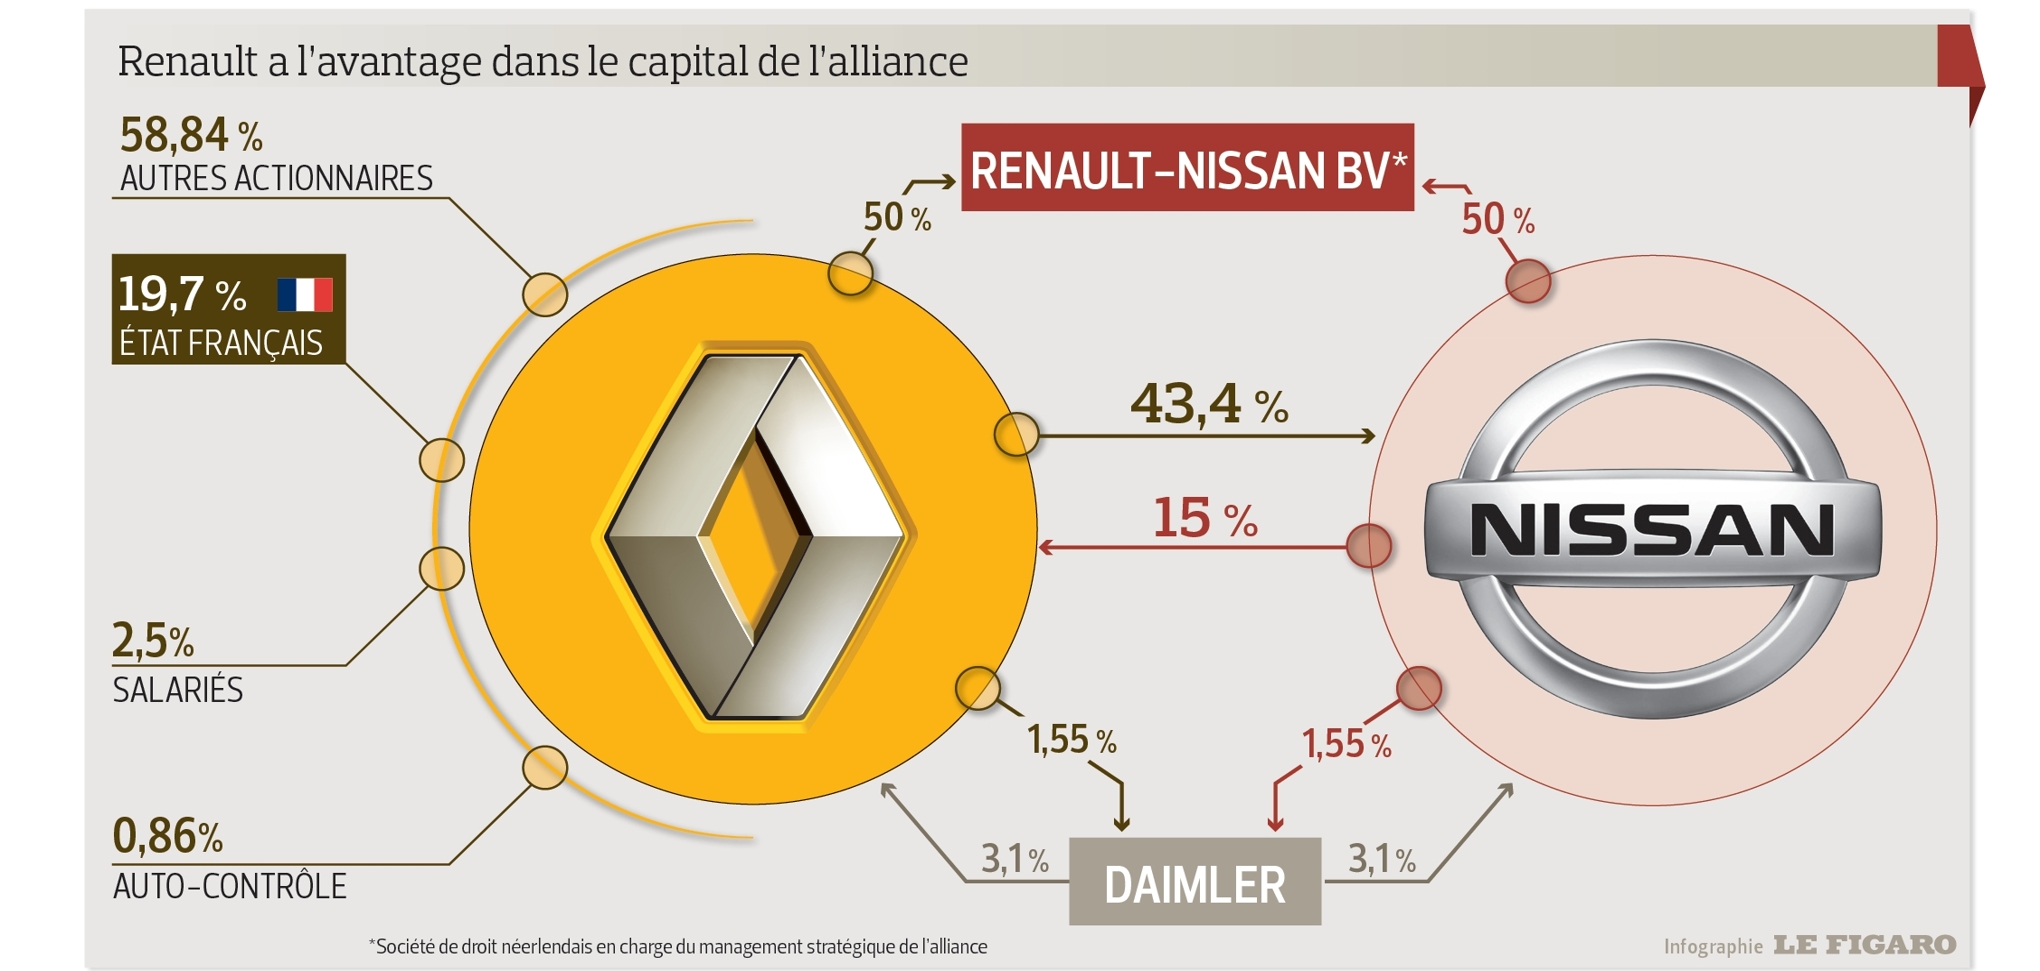 Le capital - Alliance Renault Nissan - avril 2015